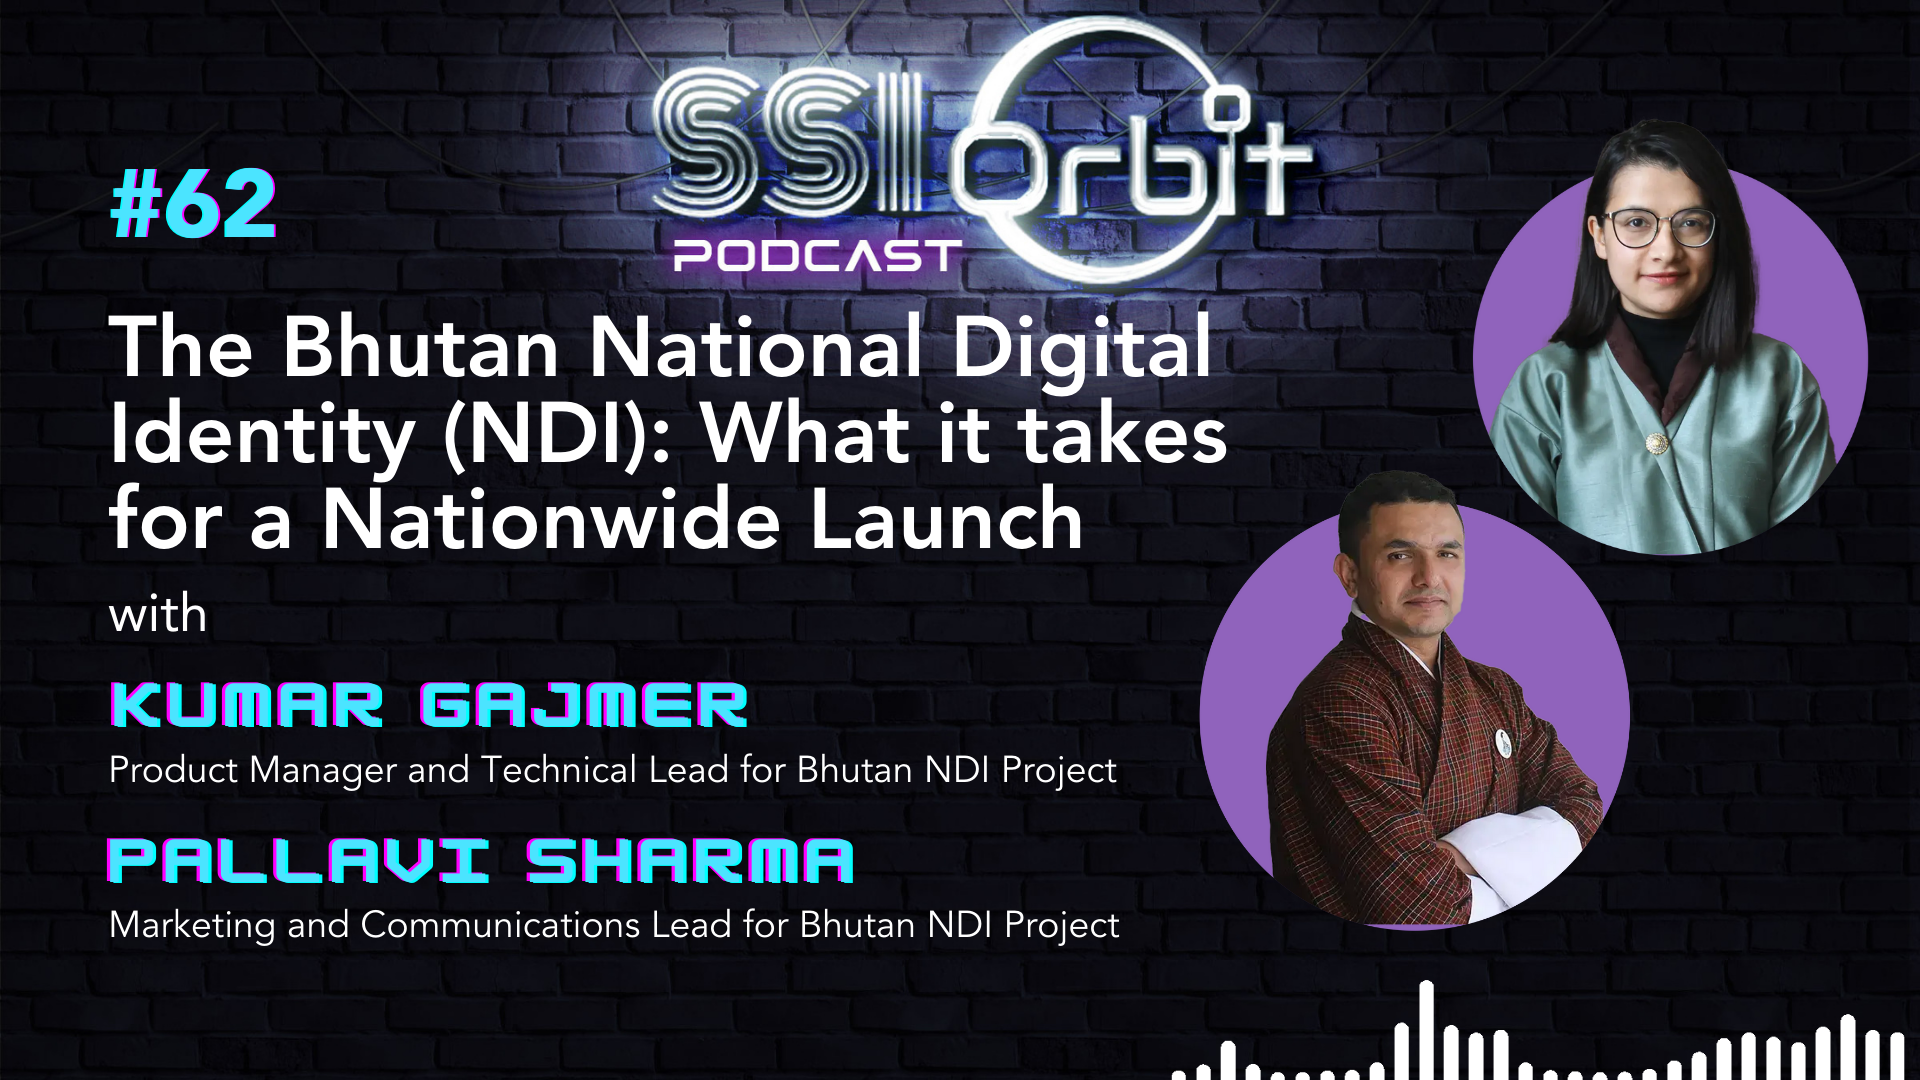 The Bhutan National Digital Identity (NDI): What it takes for a Nationwide Launch (with Kumar Gajmer & Pallavi Sharma)